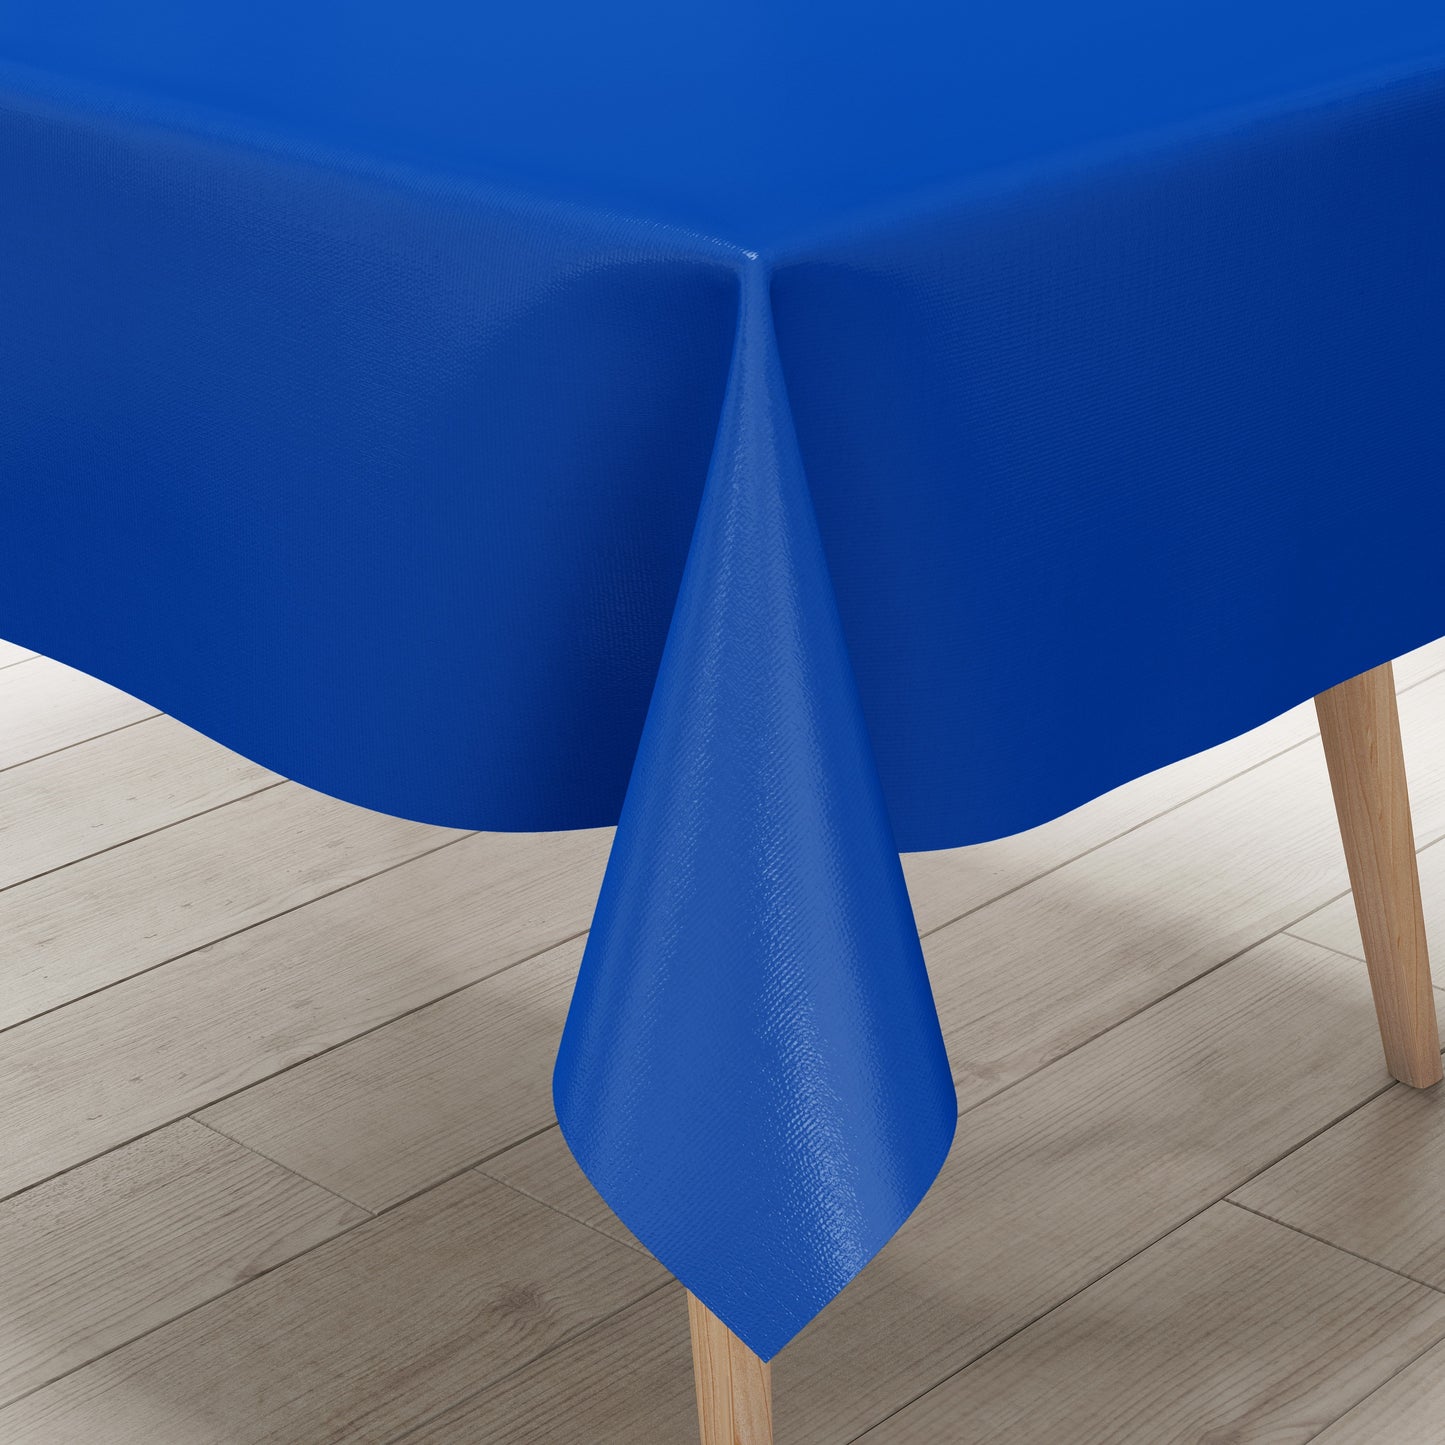 Wachstuch Tischdecke uni295 einfarbig royalblau blau eckig rund oval